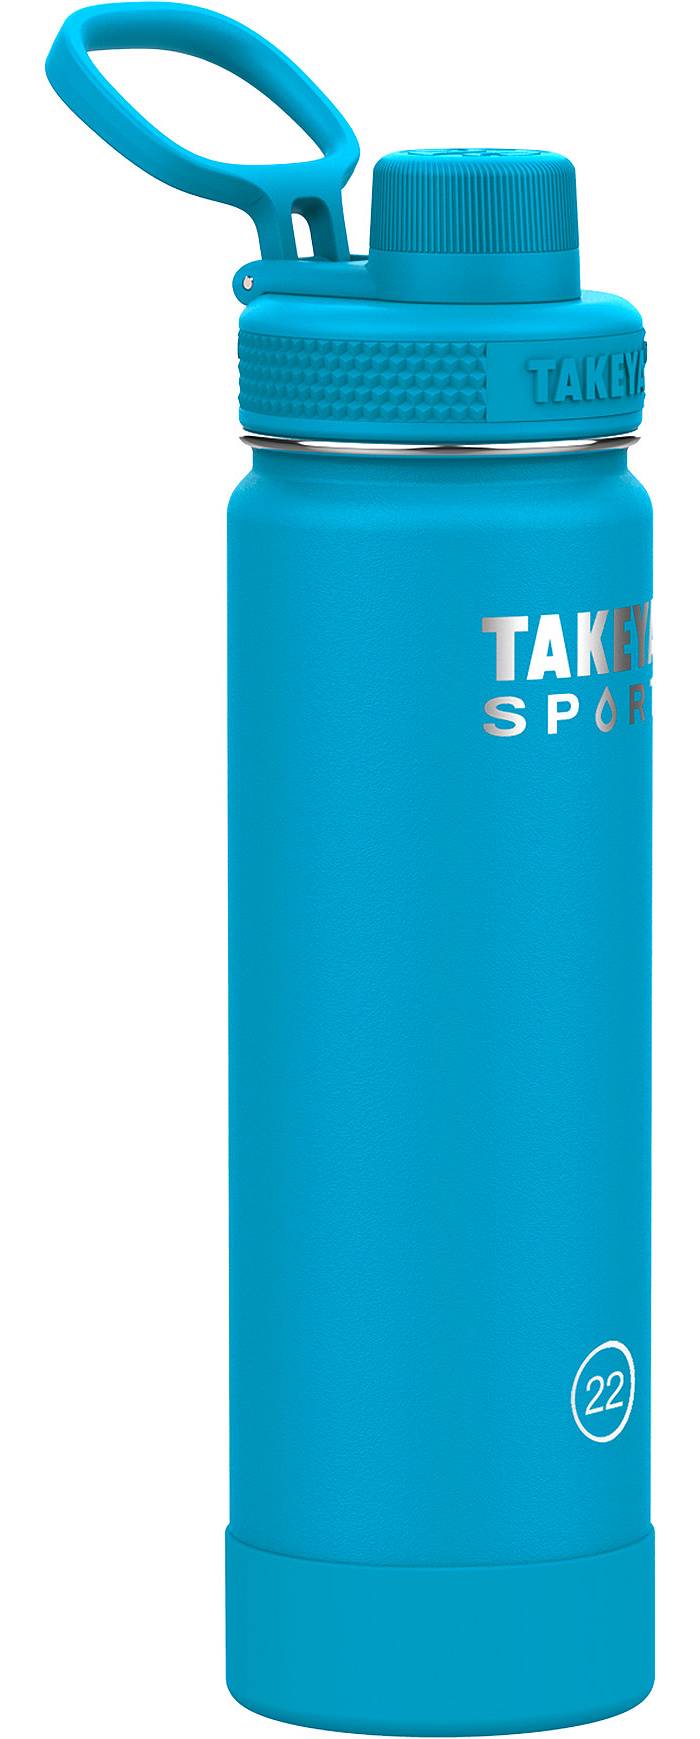 Takeya Sport 22 oz. Water Bottle with Spout Lid, Championship Blue